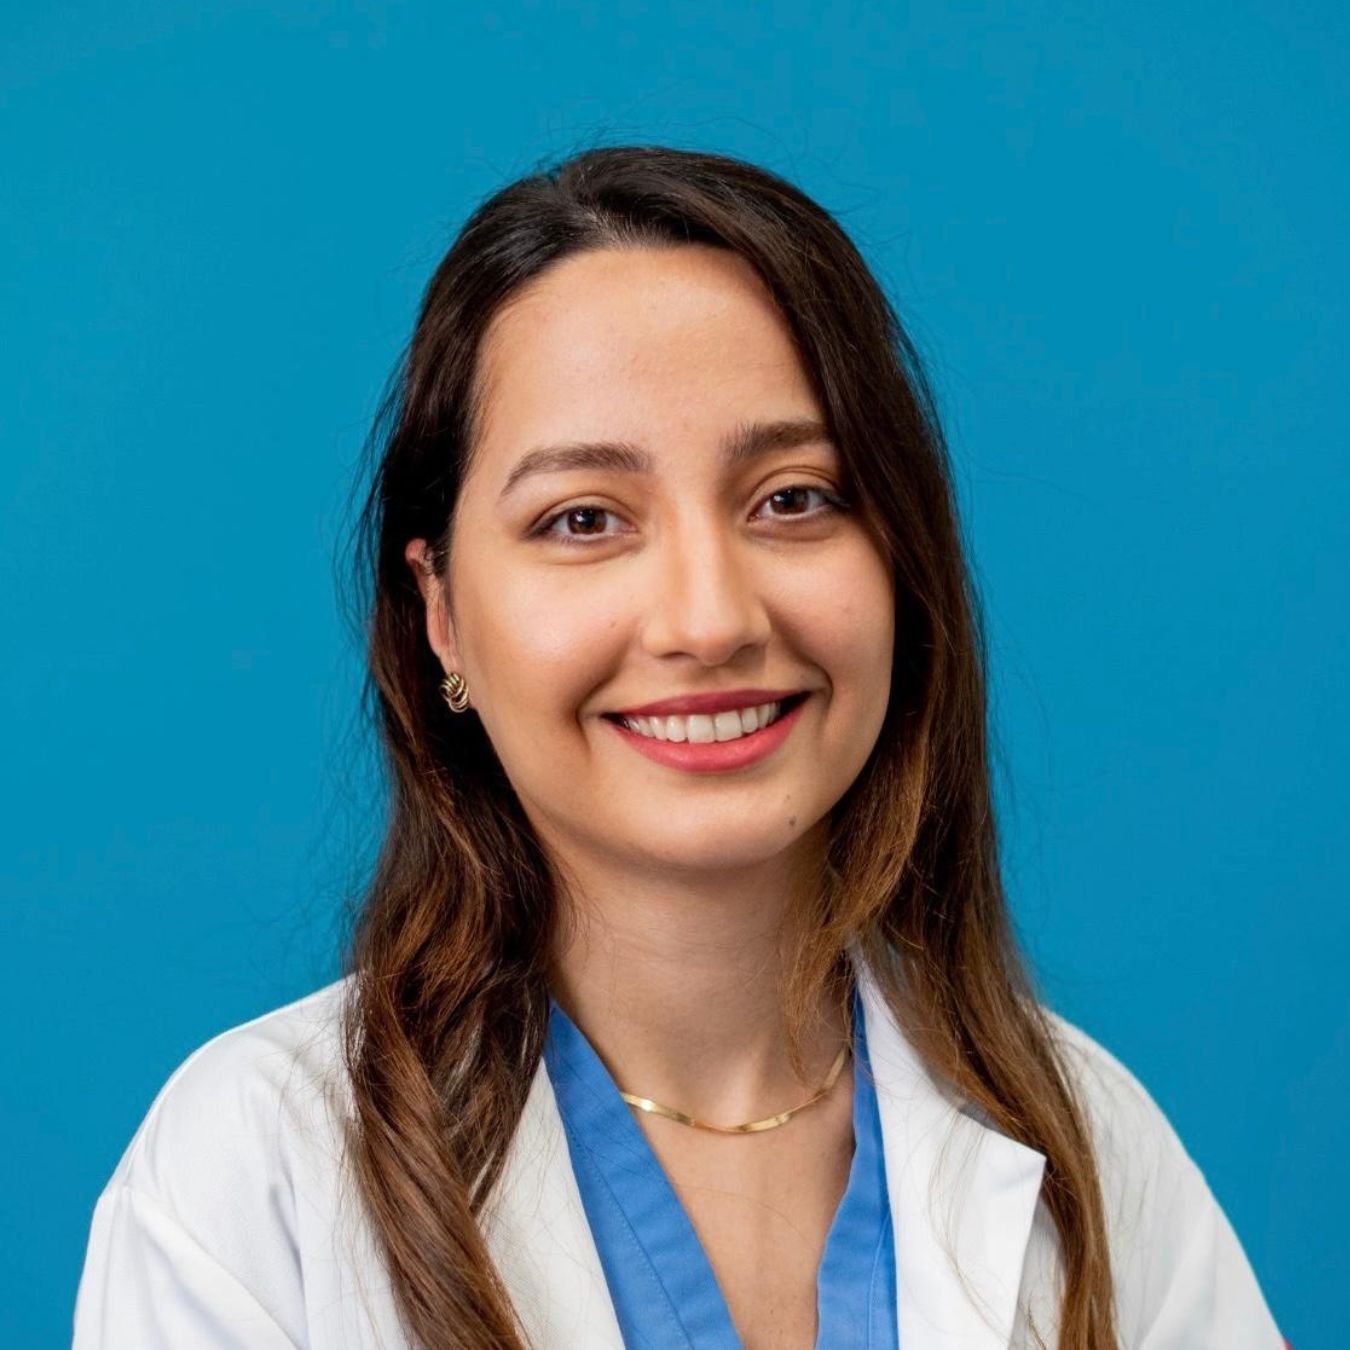 Dentist in Scarborough, Toronto - Dr. Maral Moosavi